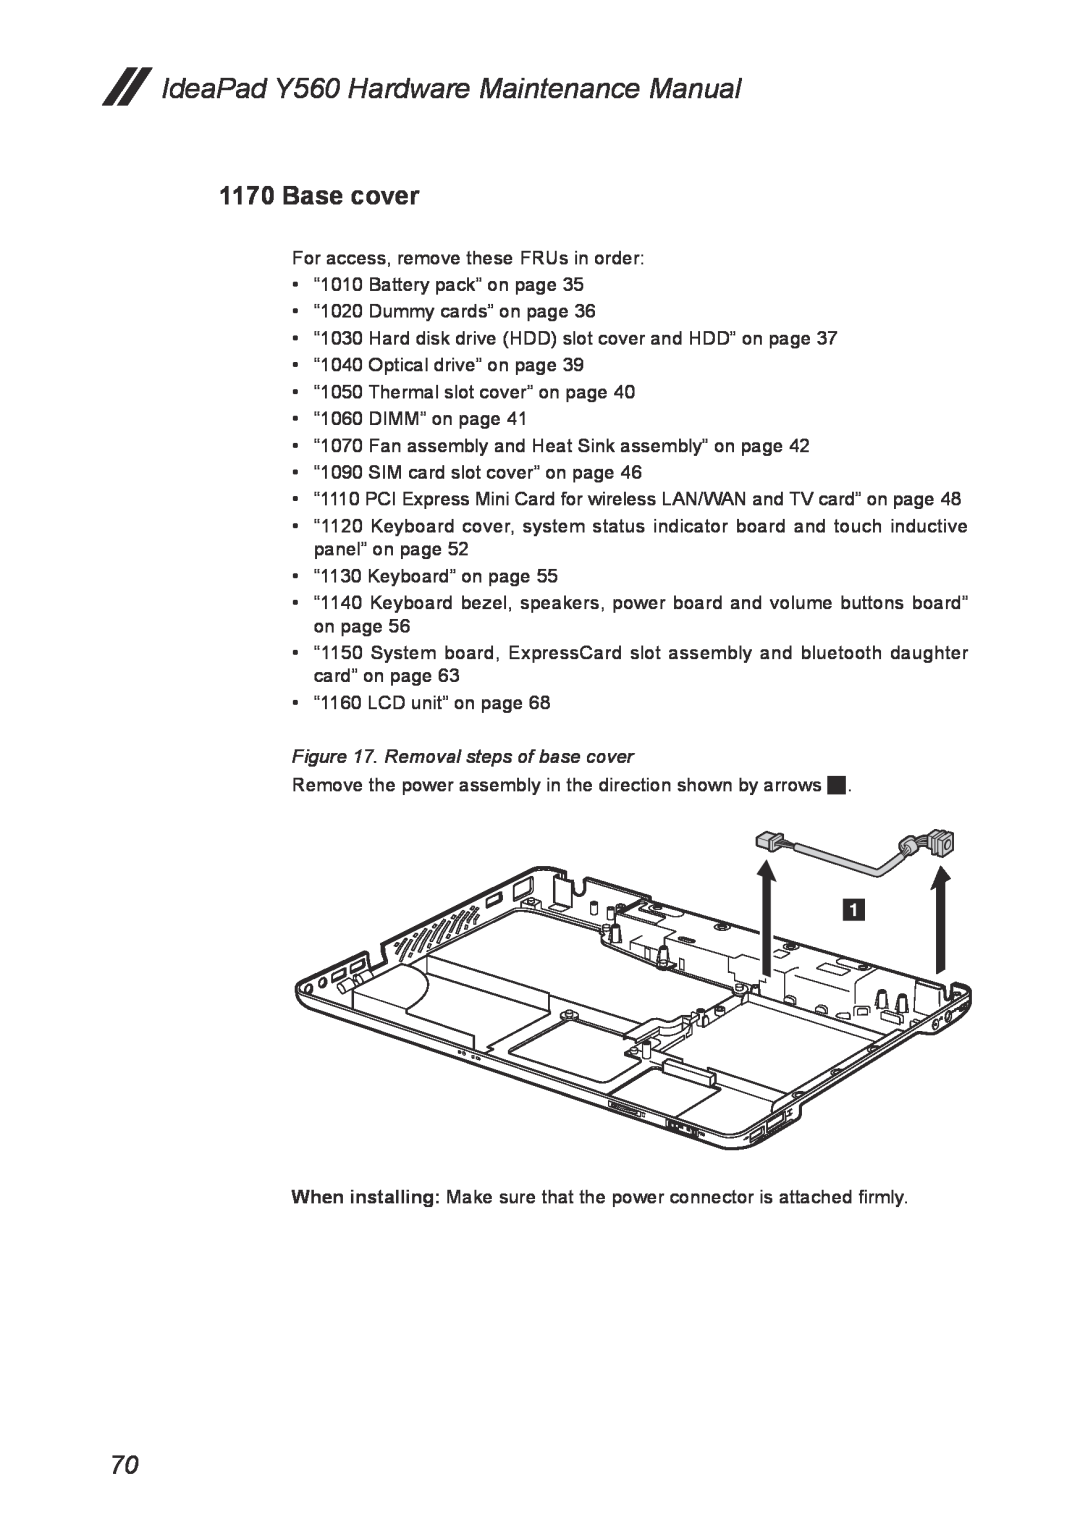 Lenovo manual Base cover, Removal steps of base cover, IdeaPad Y560 Hardware Maintenance Manual 